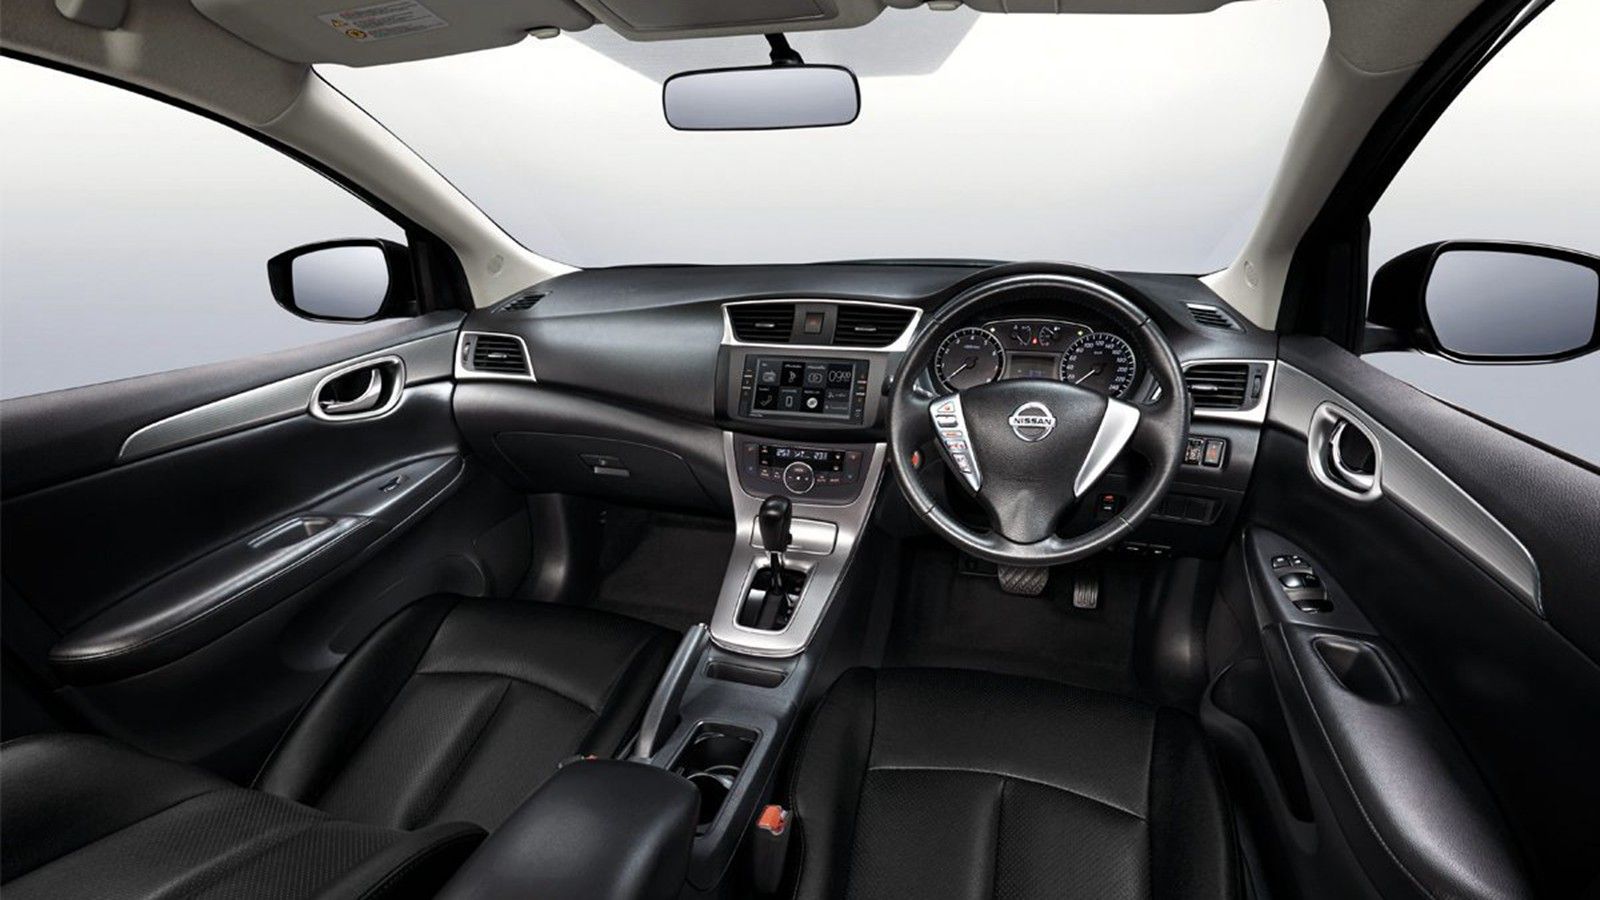 2020 Nissan Sylphy International Version Interior 001